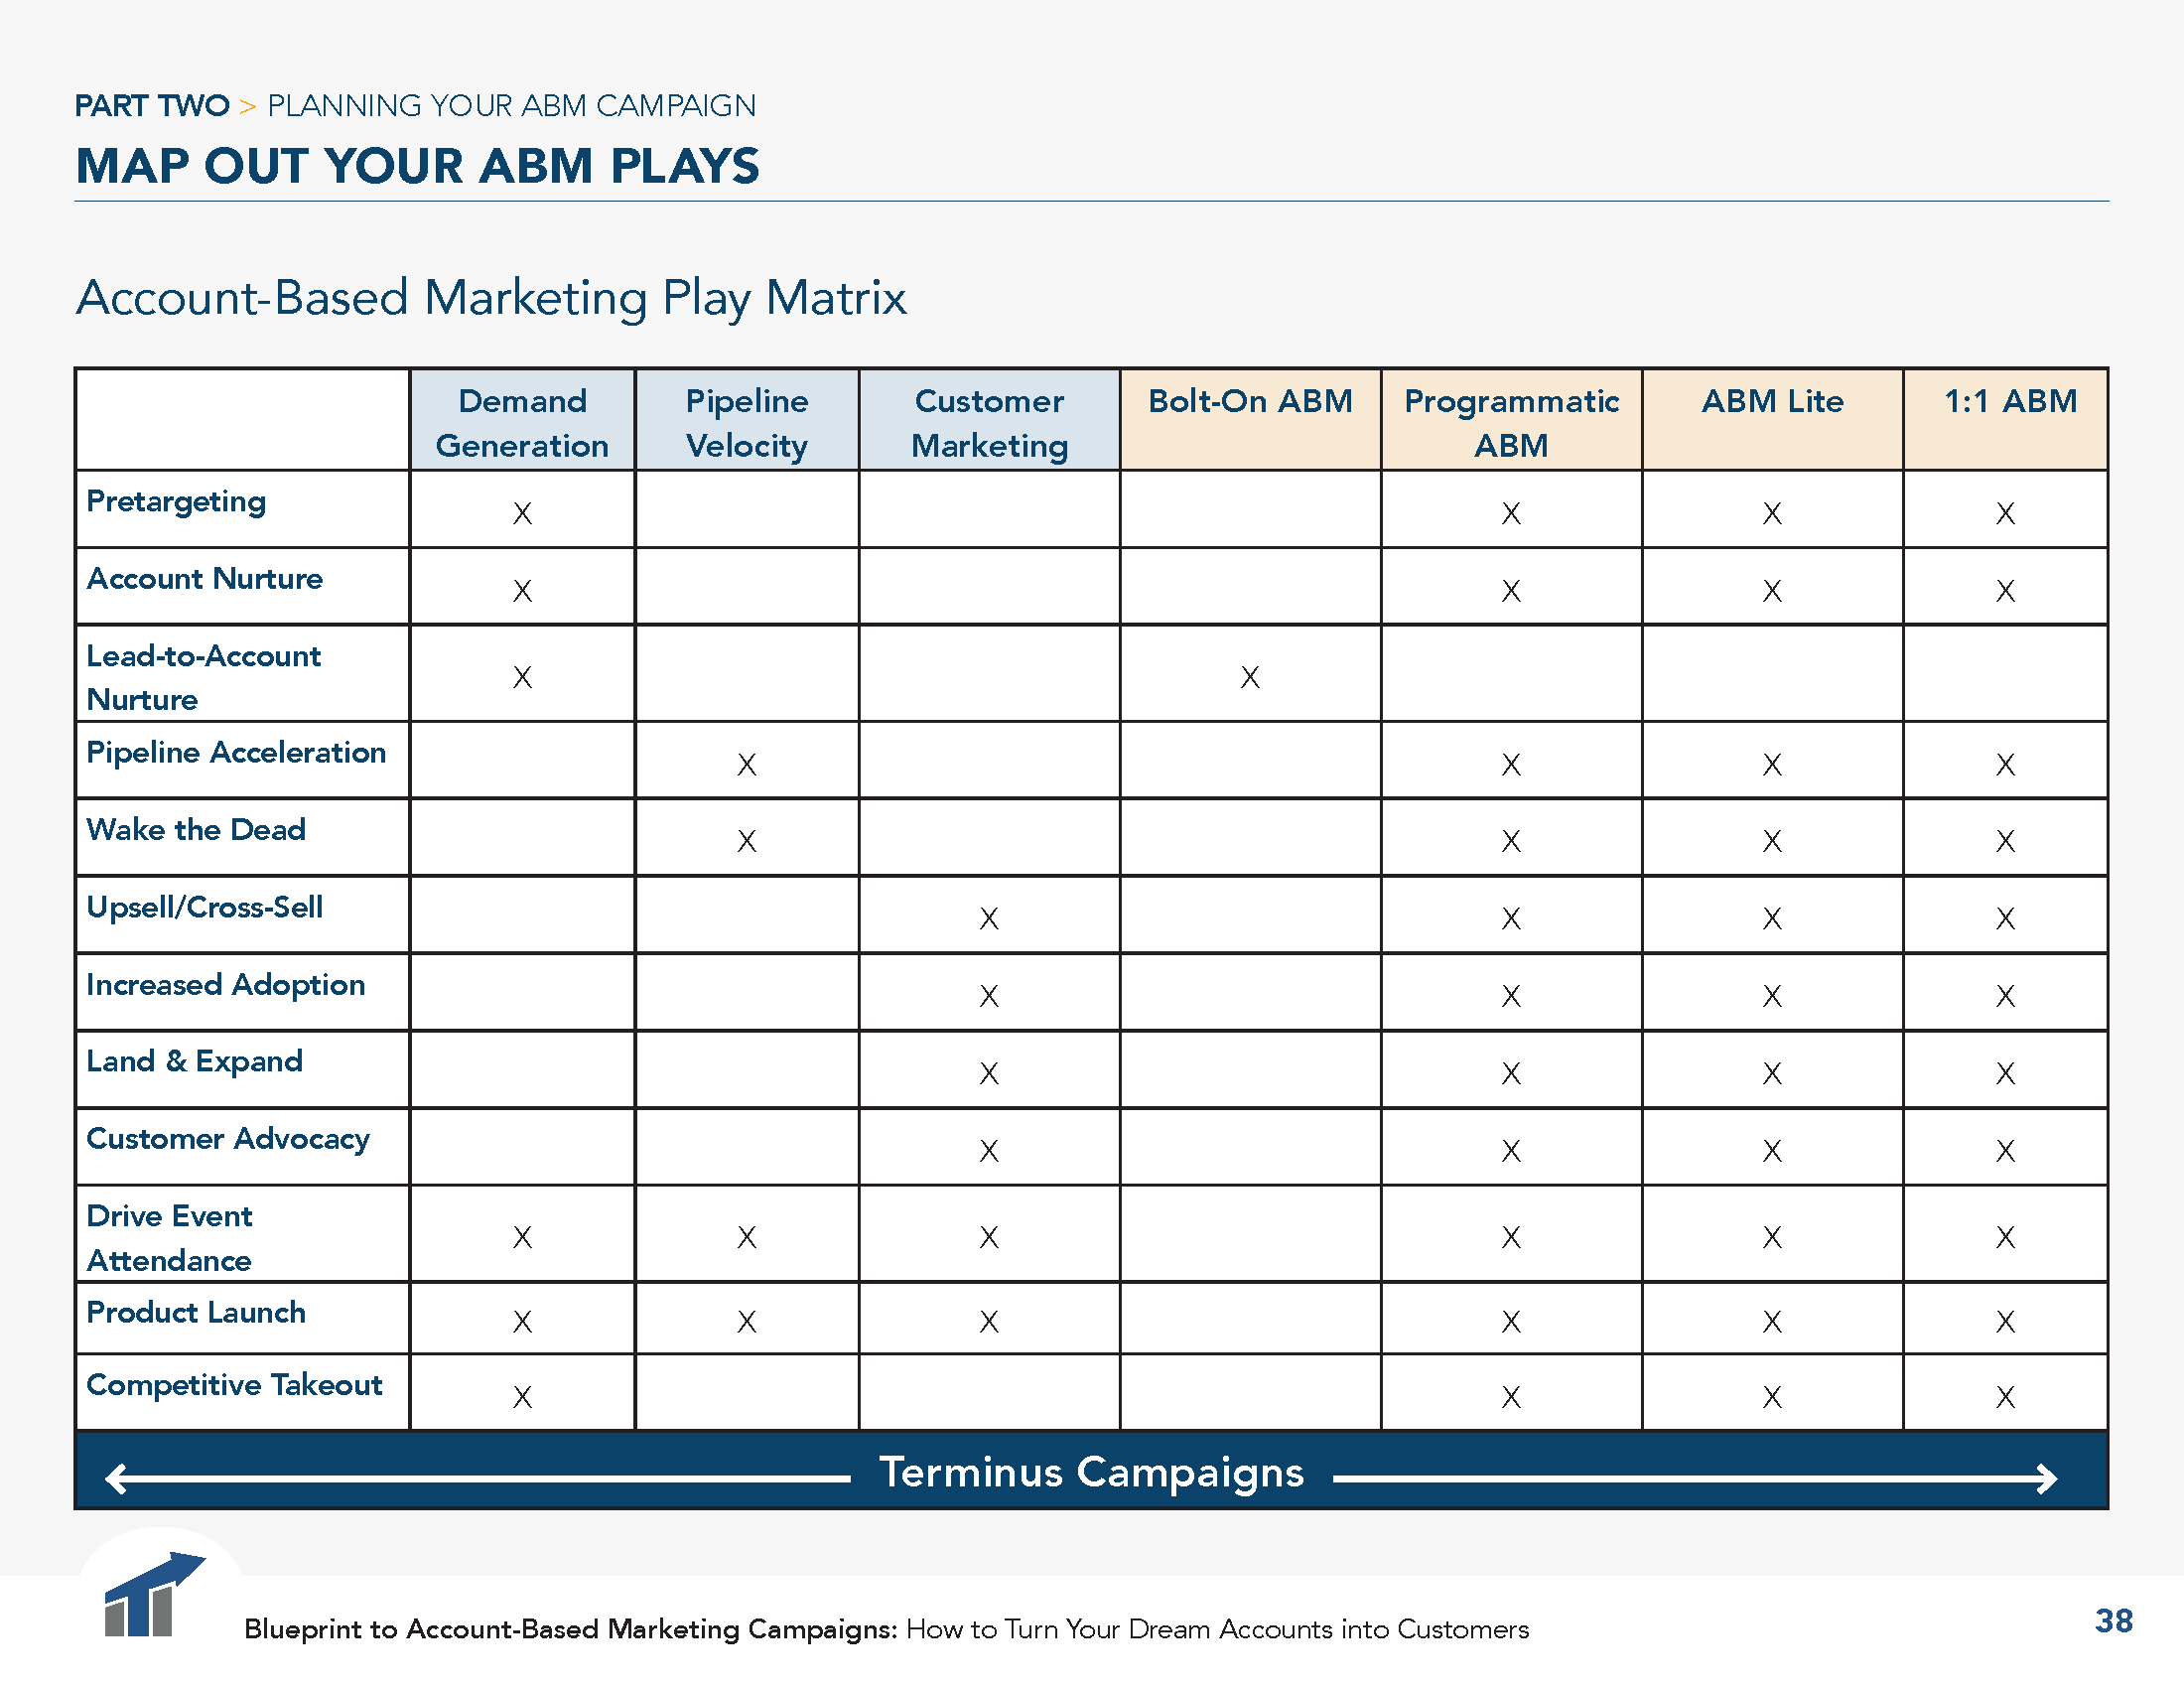 B2B account-based marketing play matrix